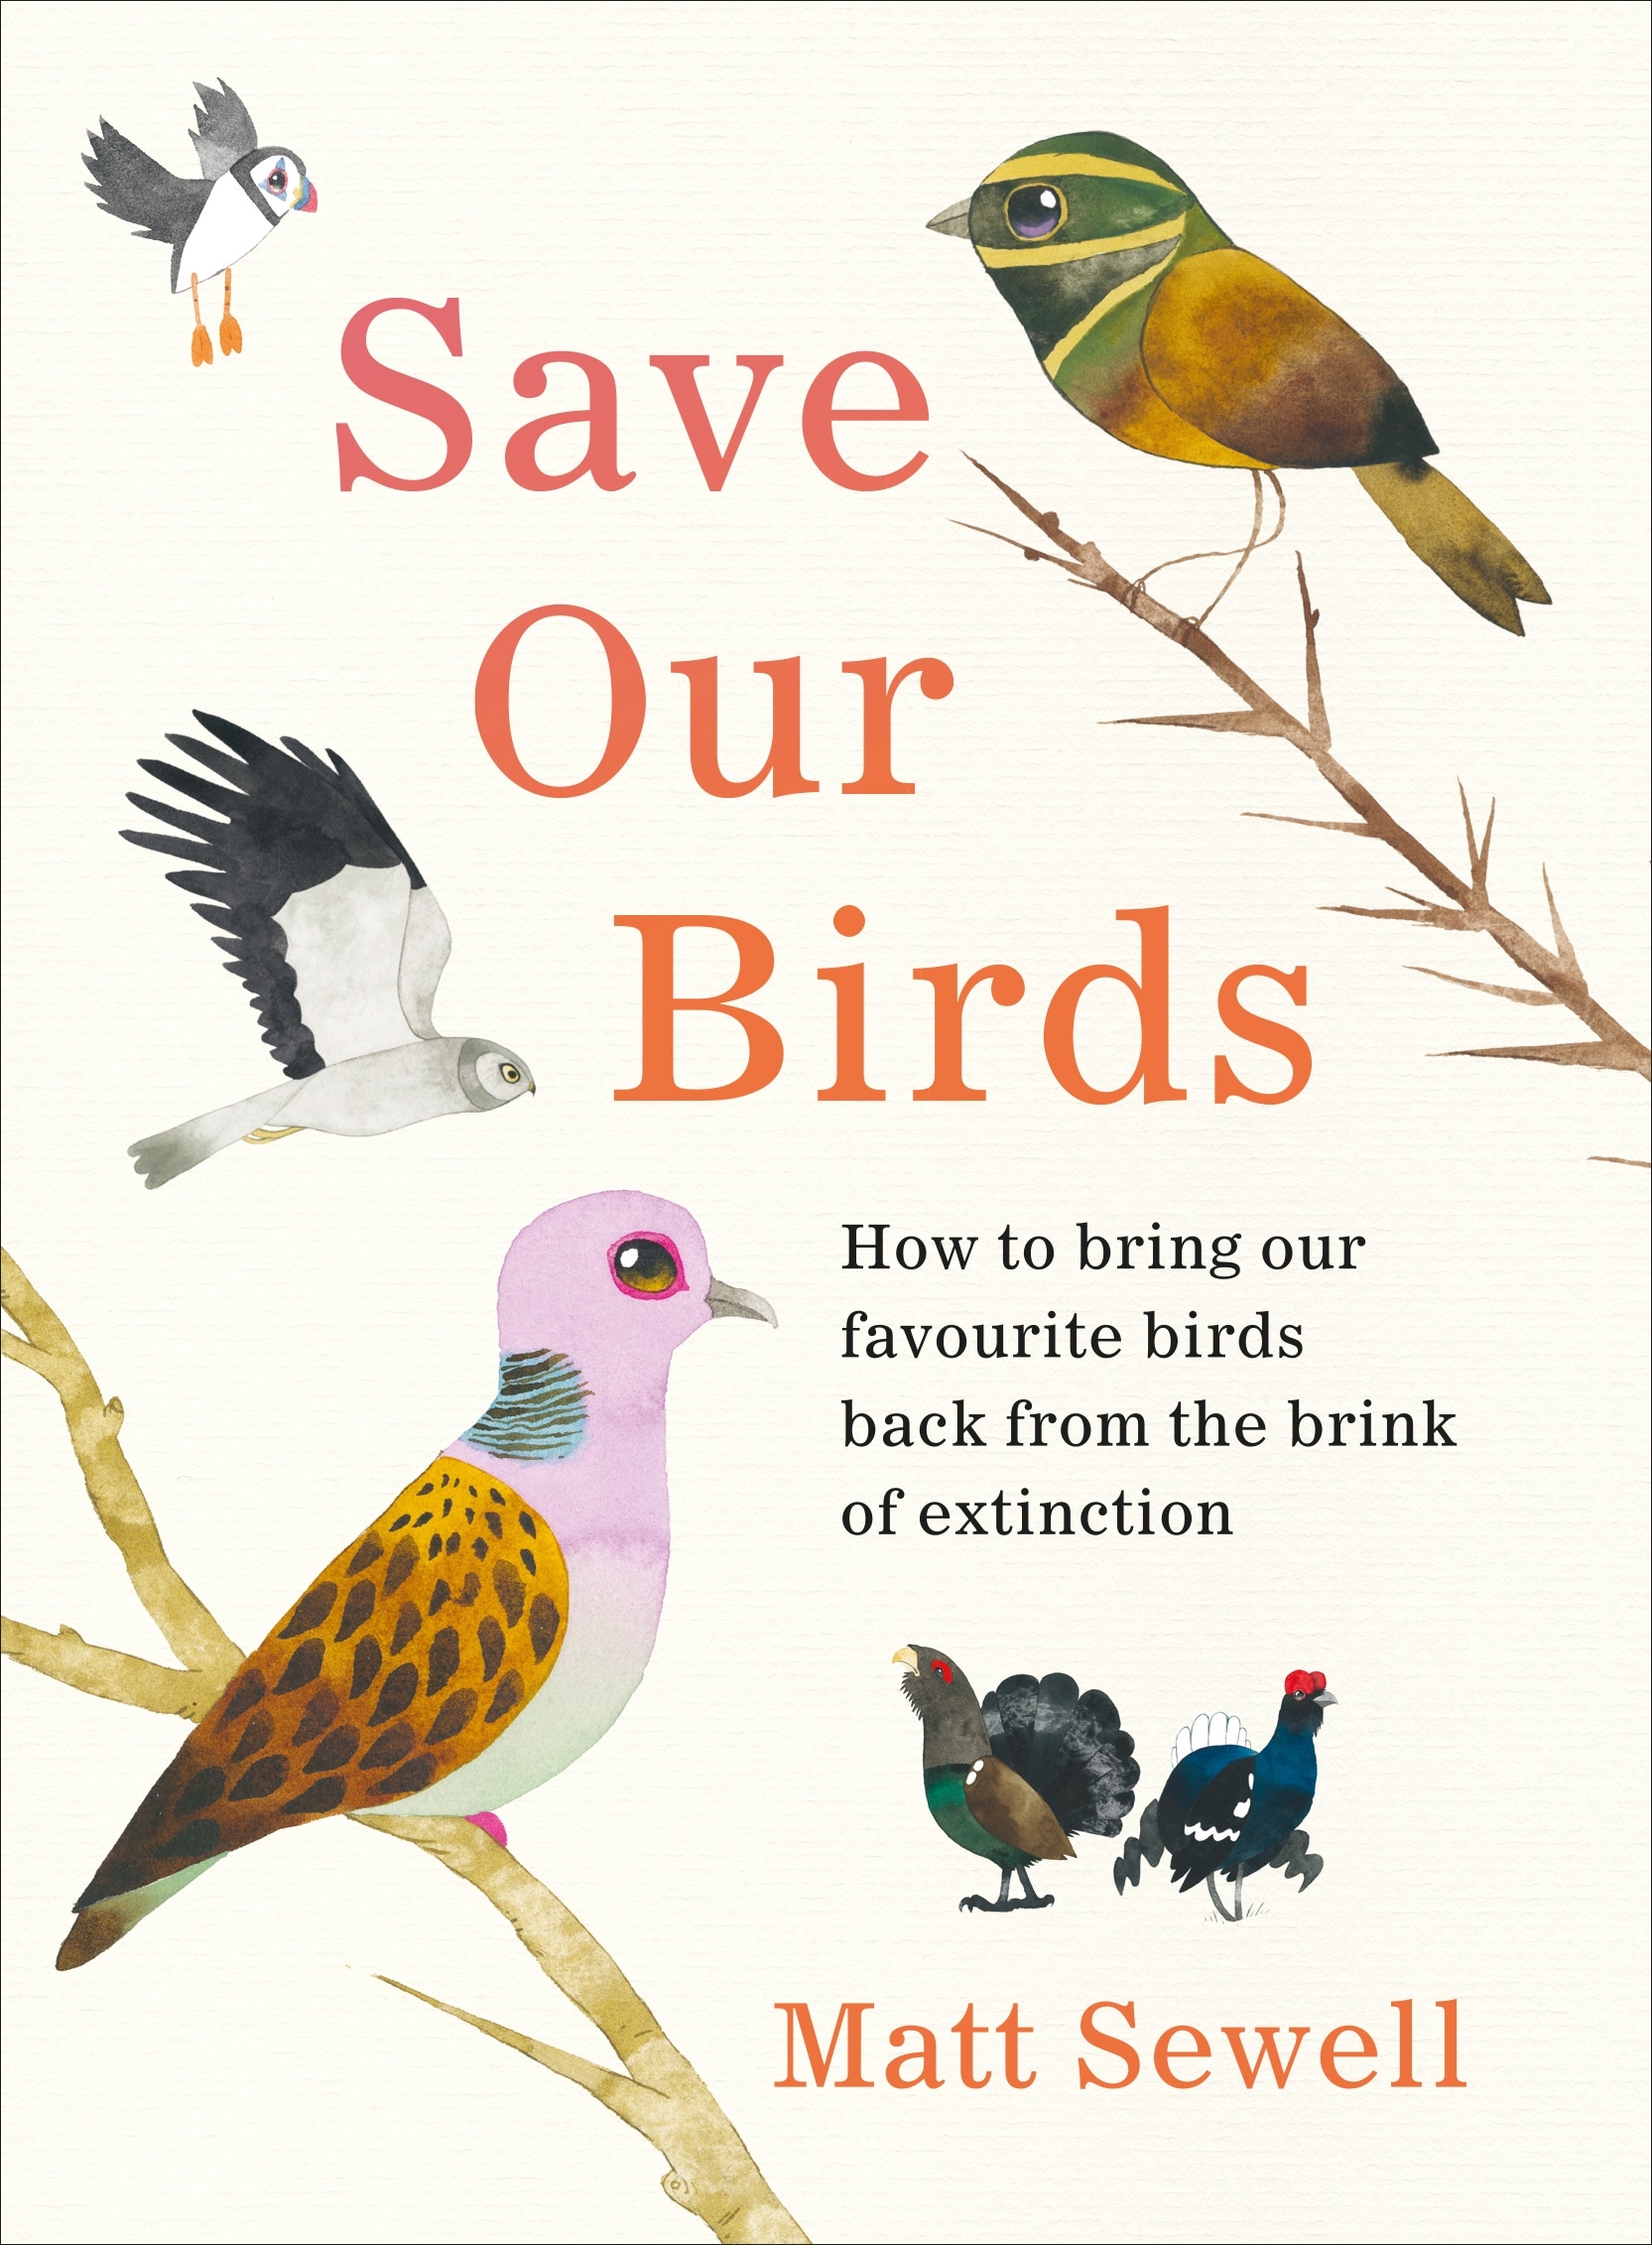 Book “Save Our Birds” by Matt Sewell — June 24, 2021